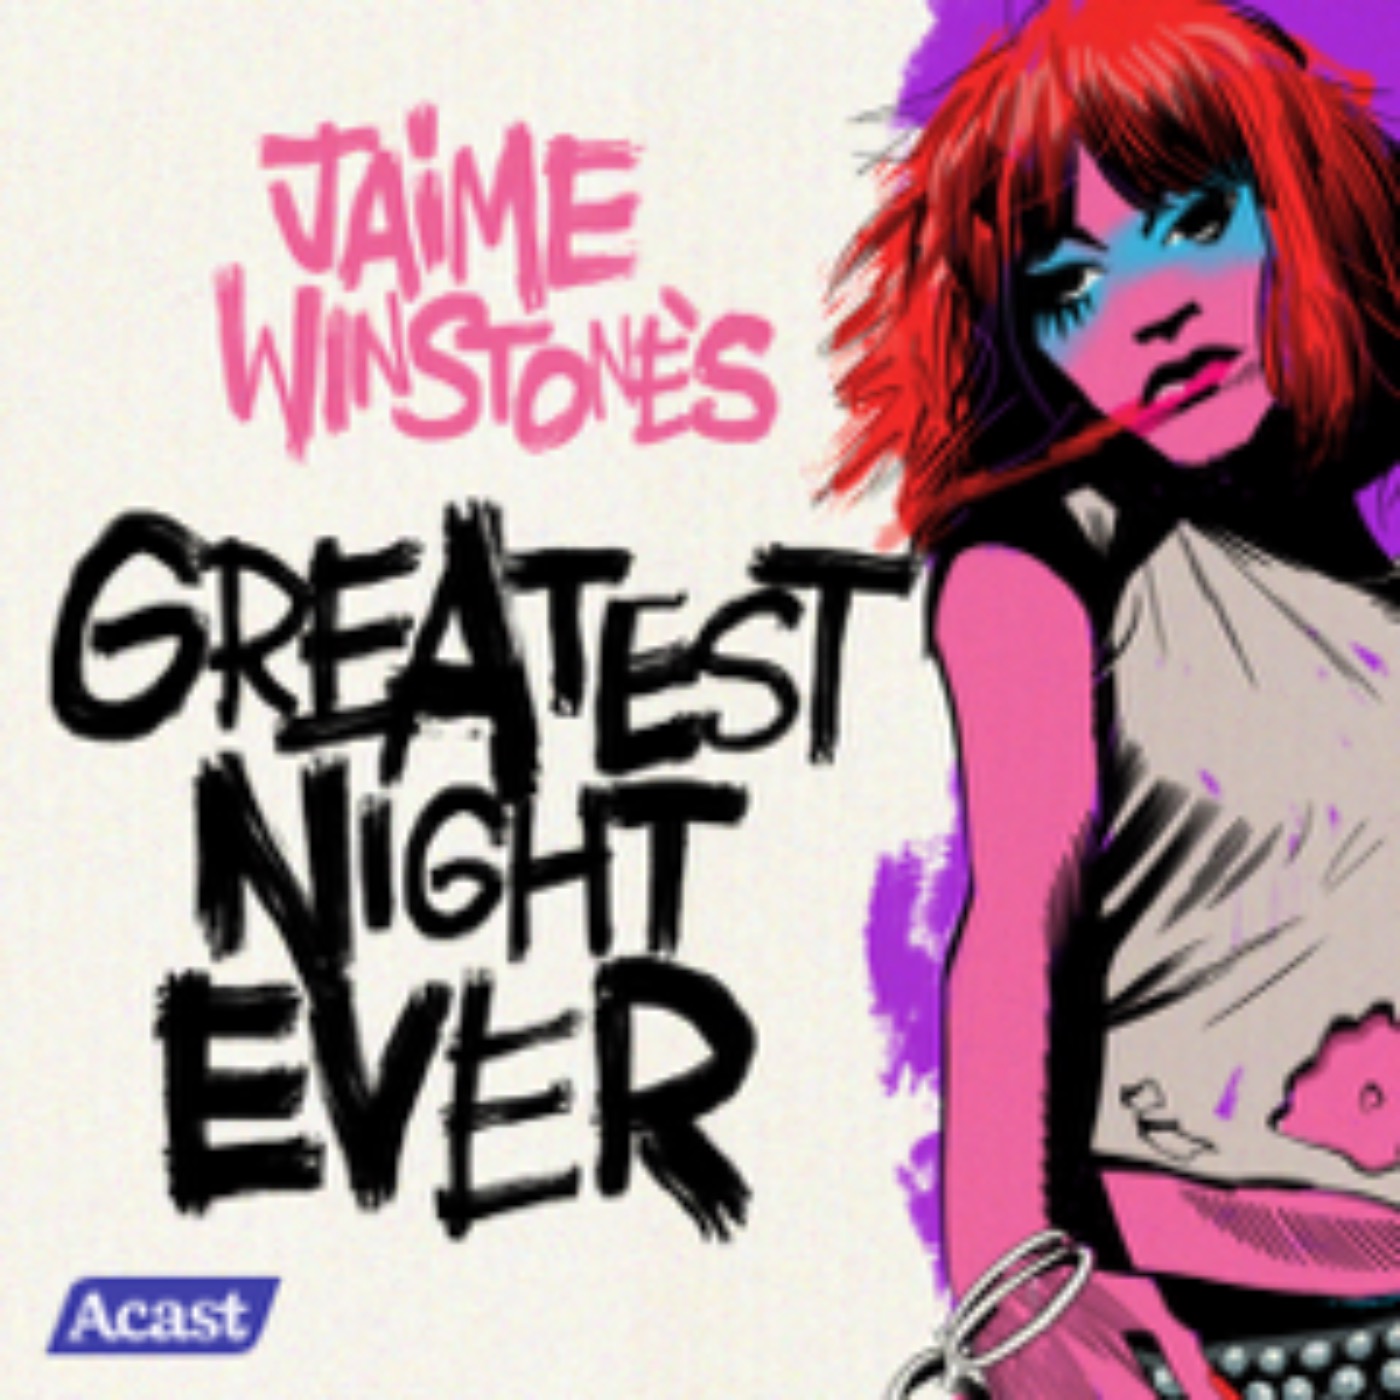 Jaime Winstone's Greatest Night Ever podcast show image